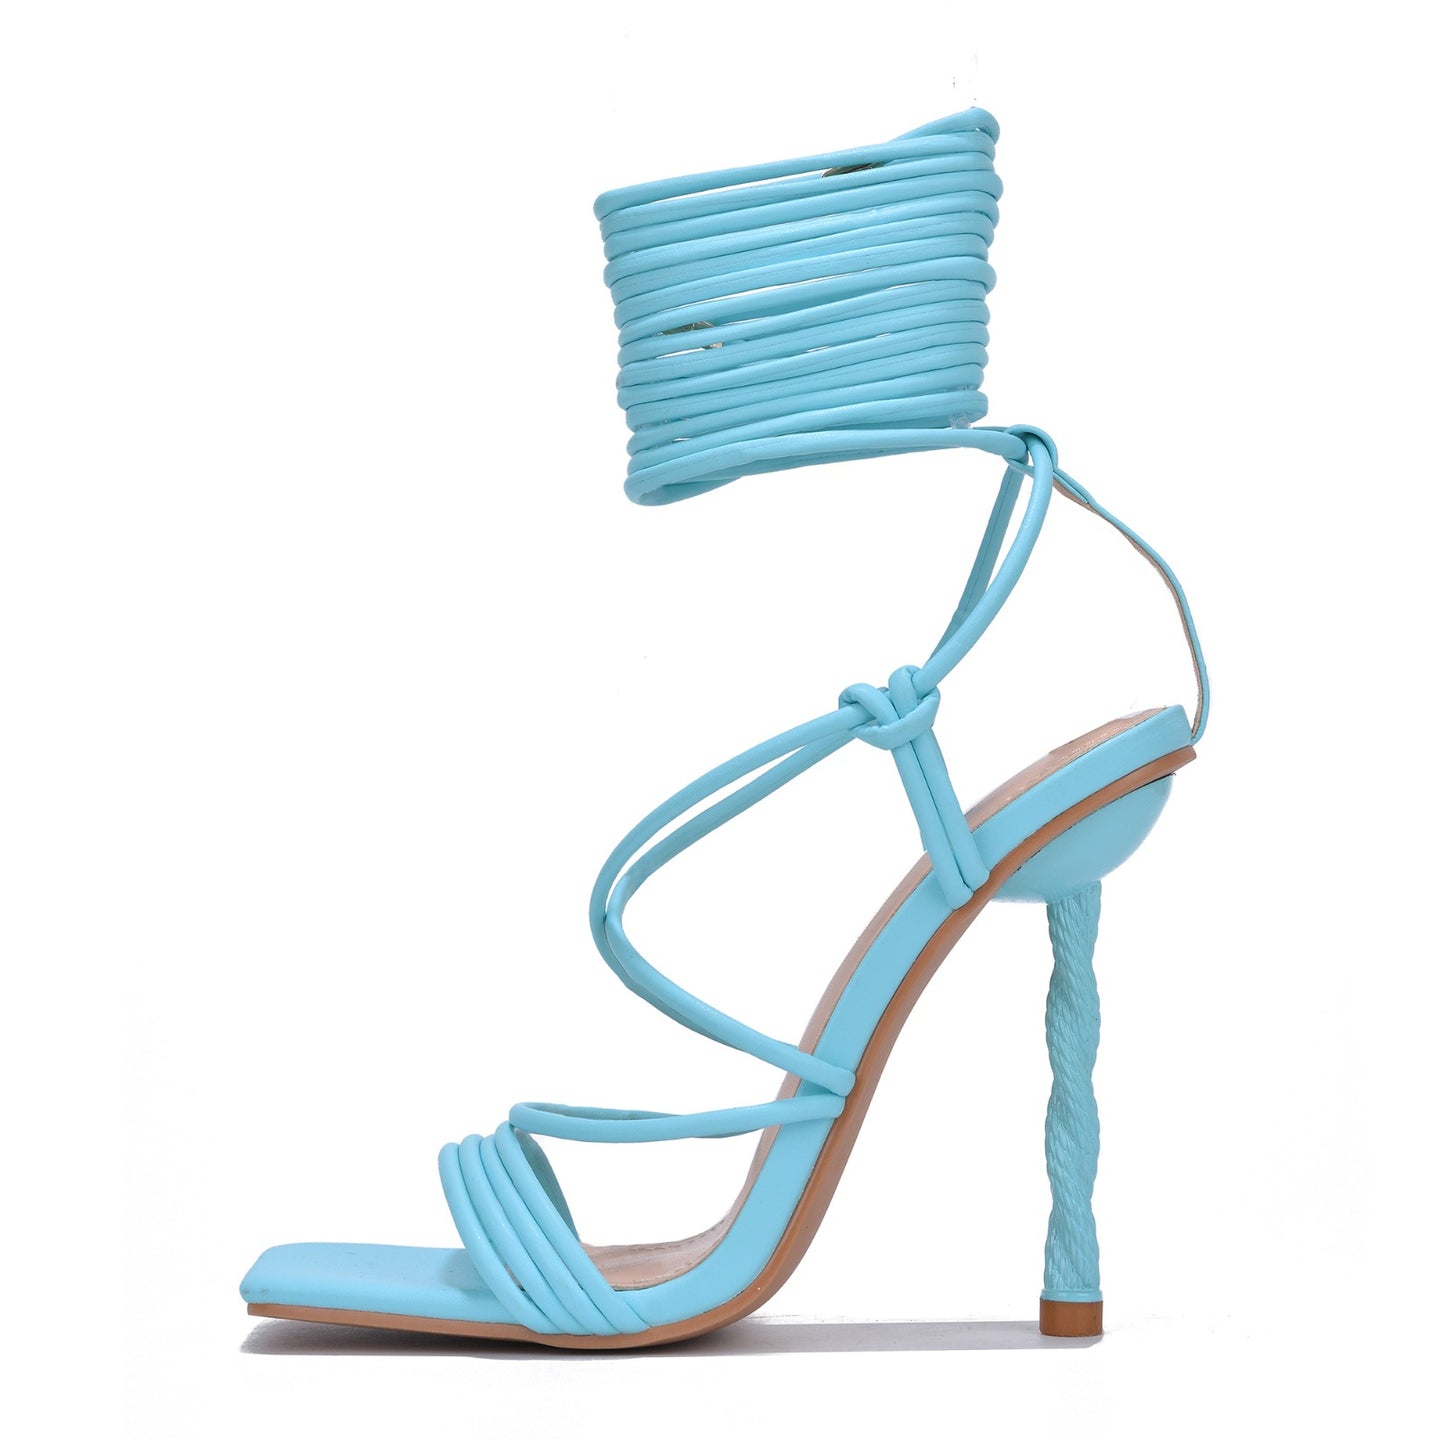 Andria heels